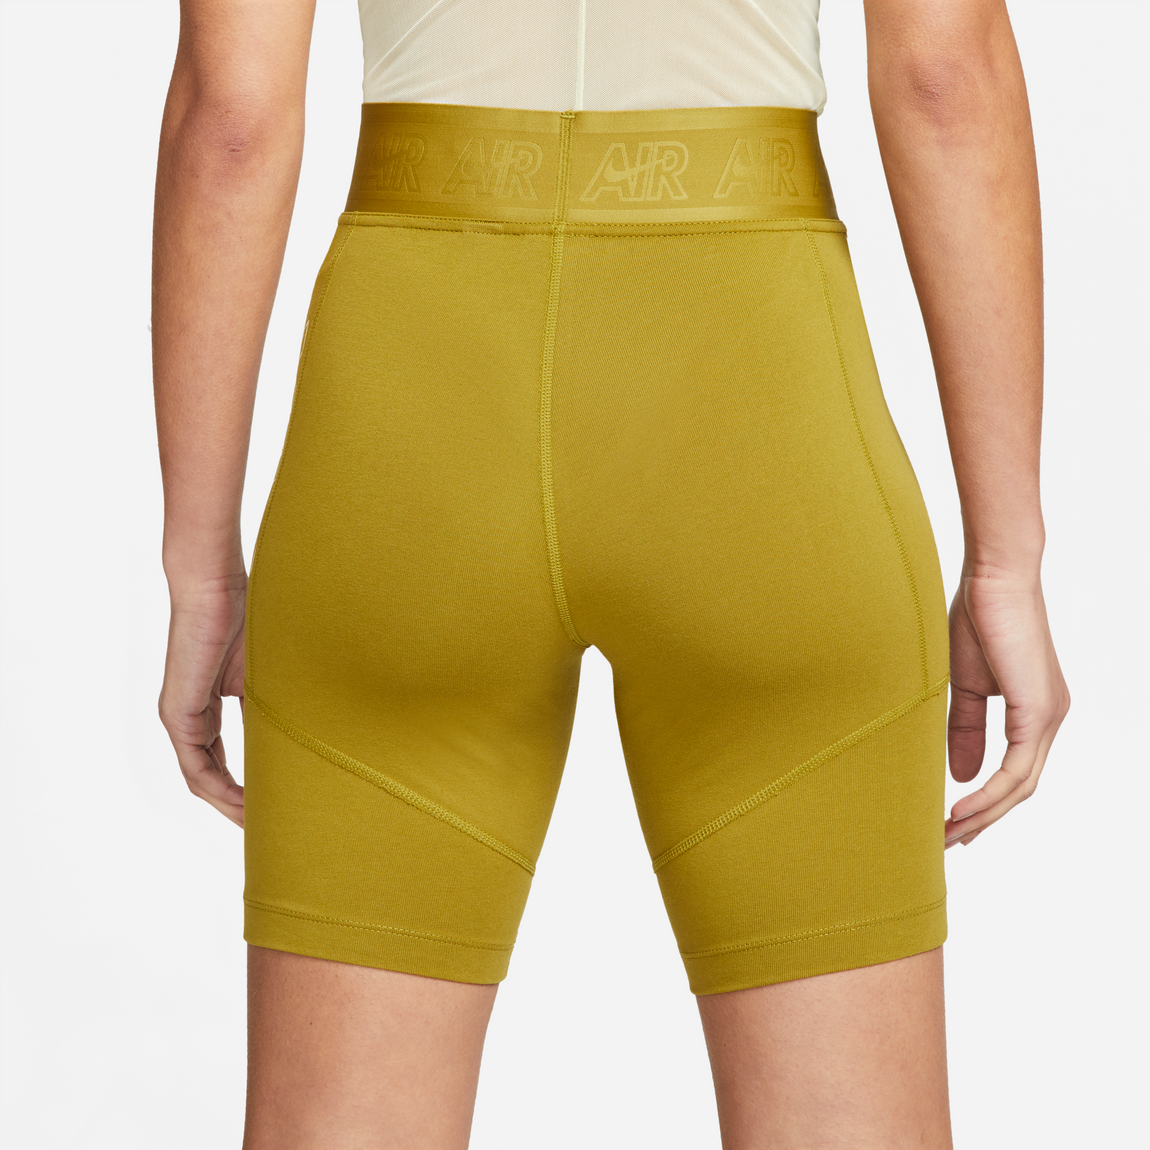 Nike Women's Bike Shorts (Desert Moss/Barley/Lemon Drop) - Nike Women's Bike Shorts (Desert Moss/Barley/Lemon Drop) - 